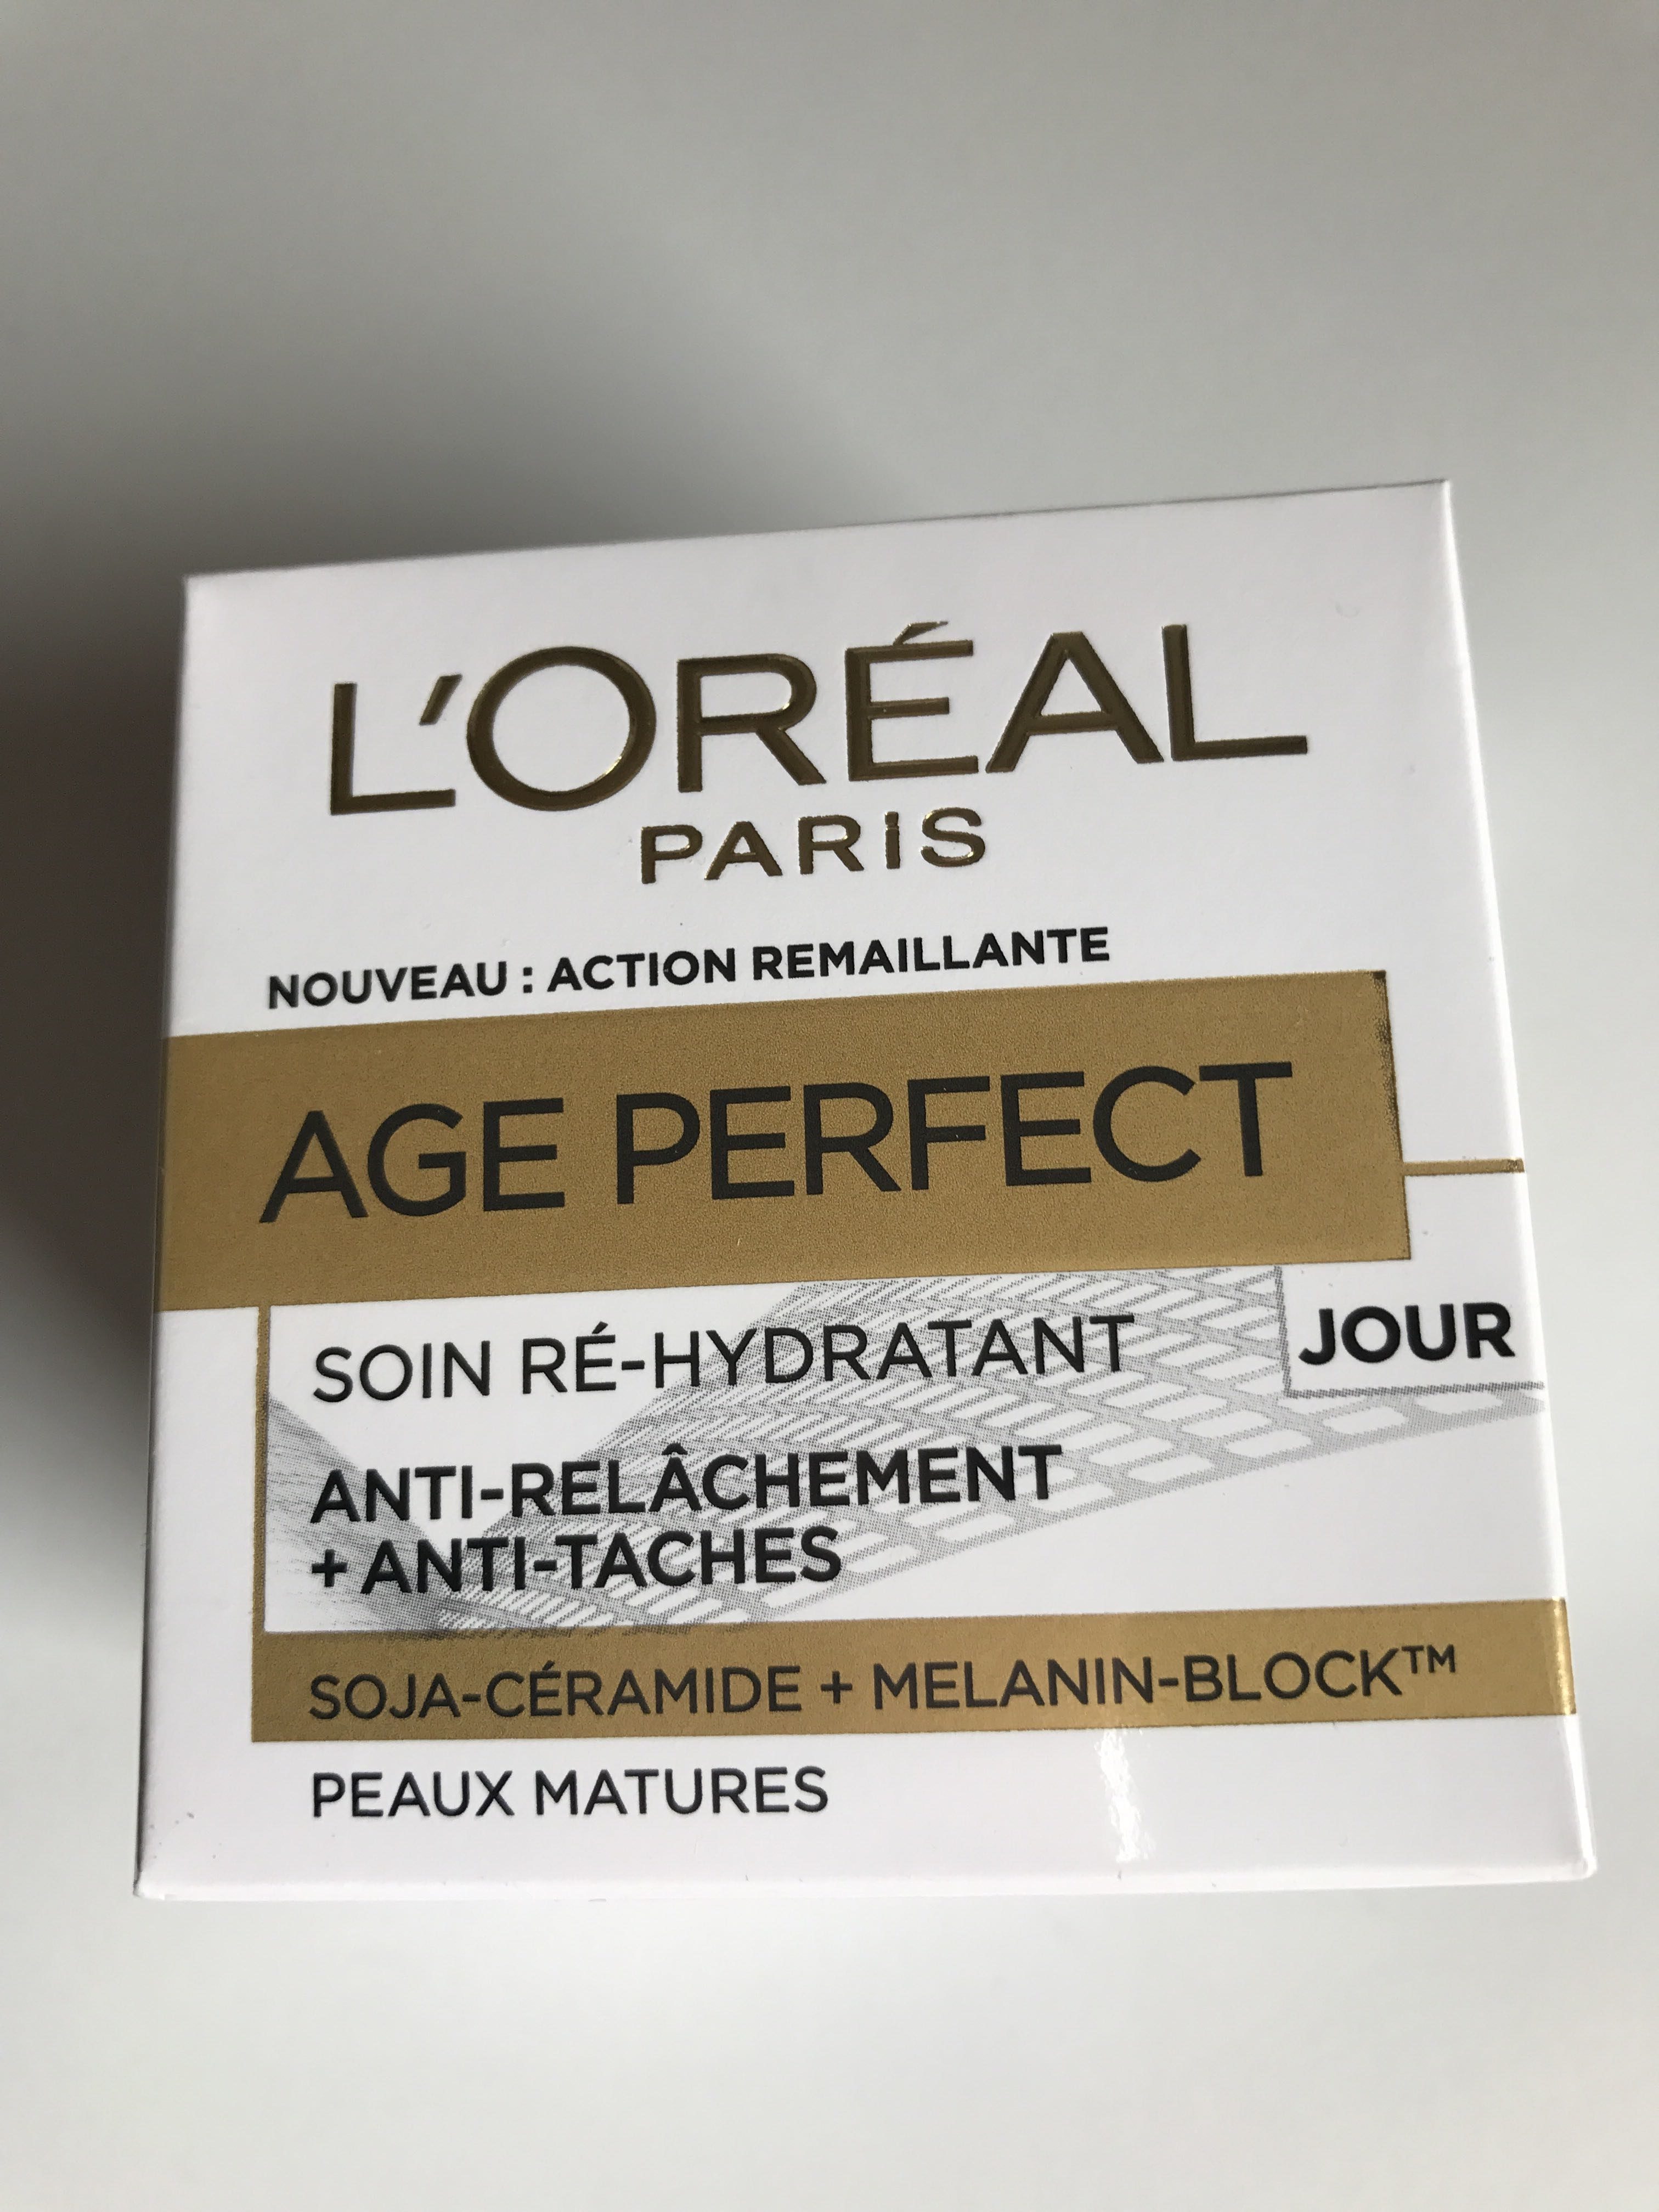 Age Perfect Soin Ré-hydratant Jour - Product - fr